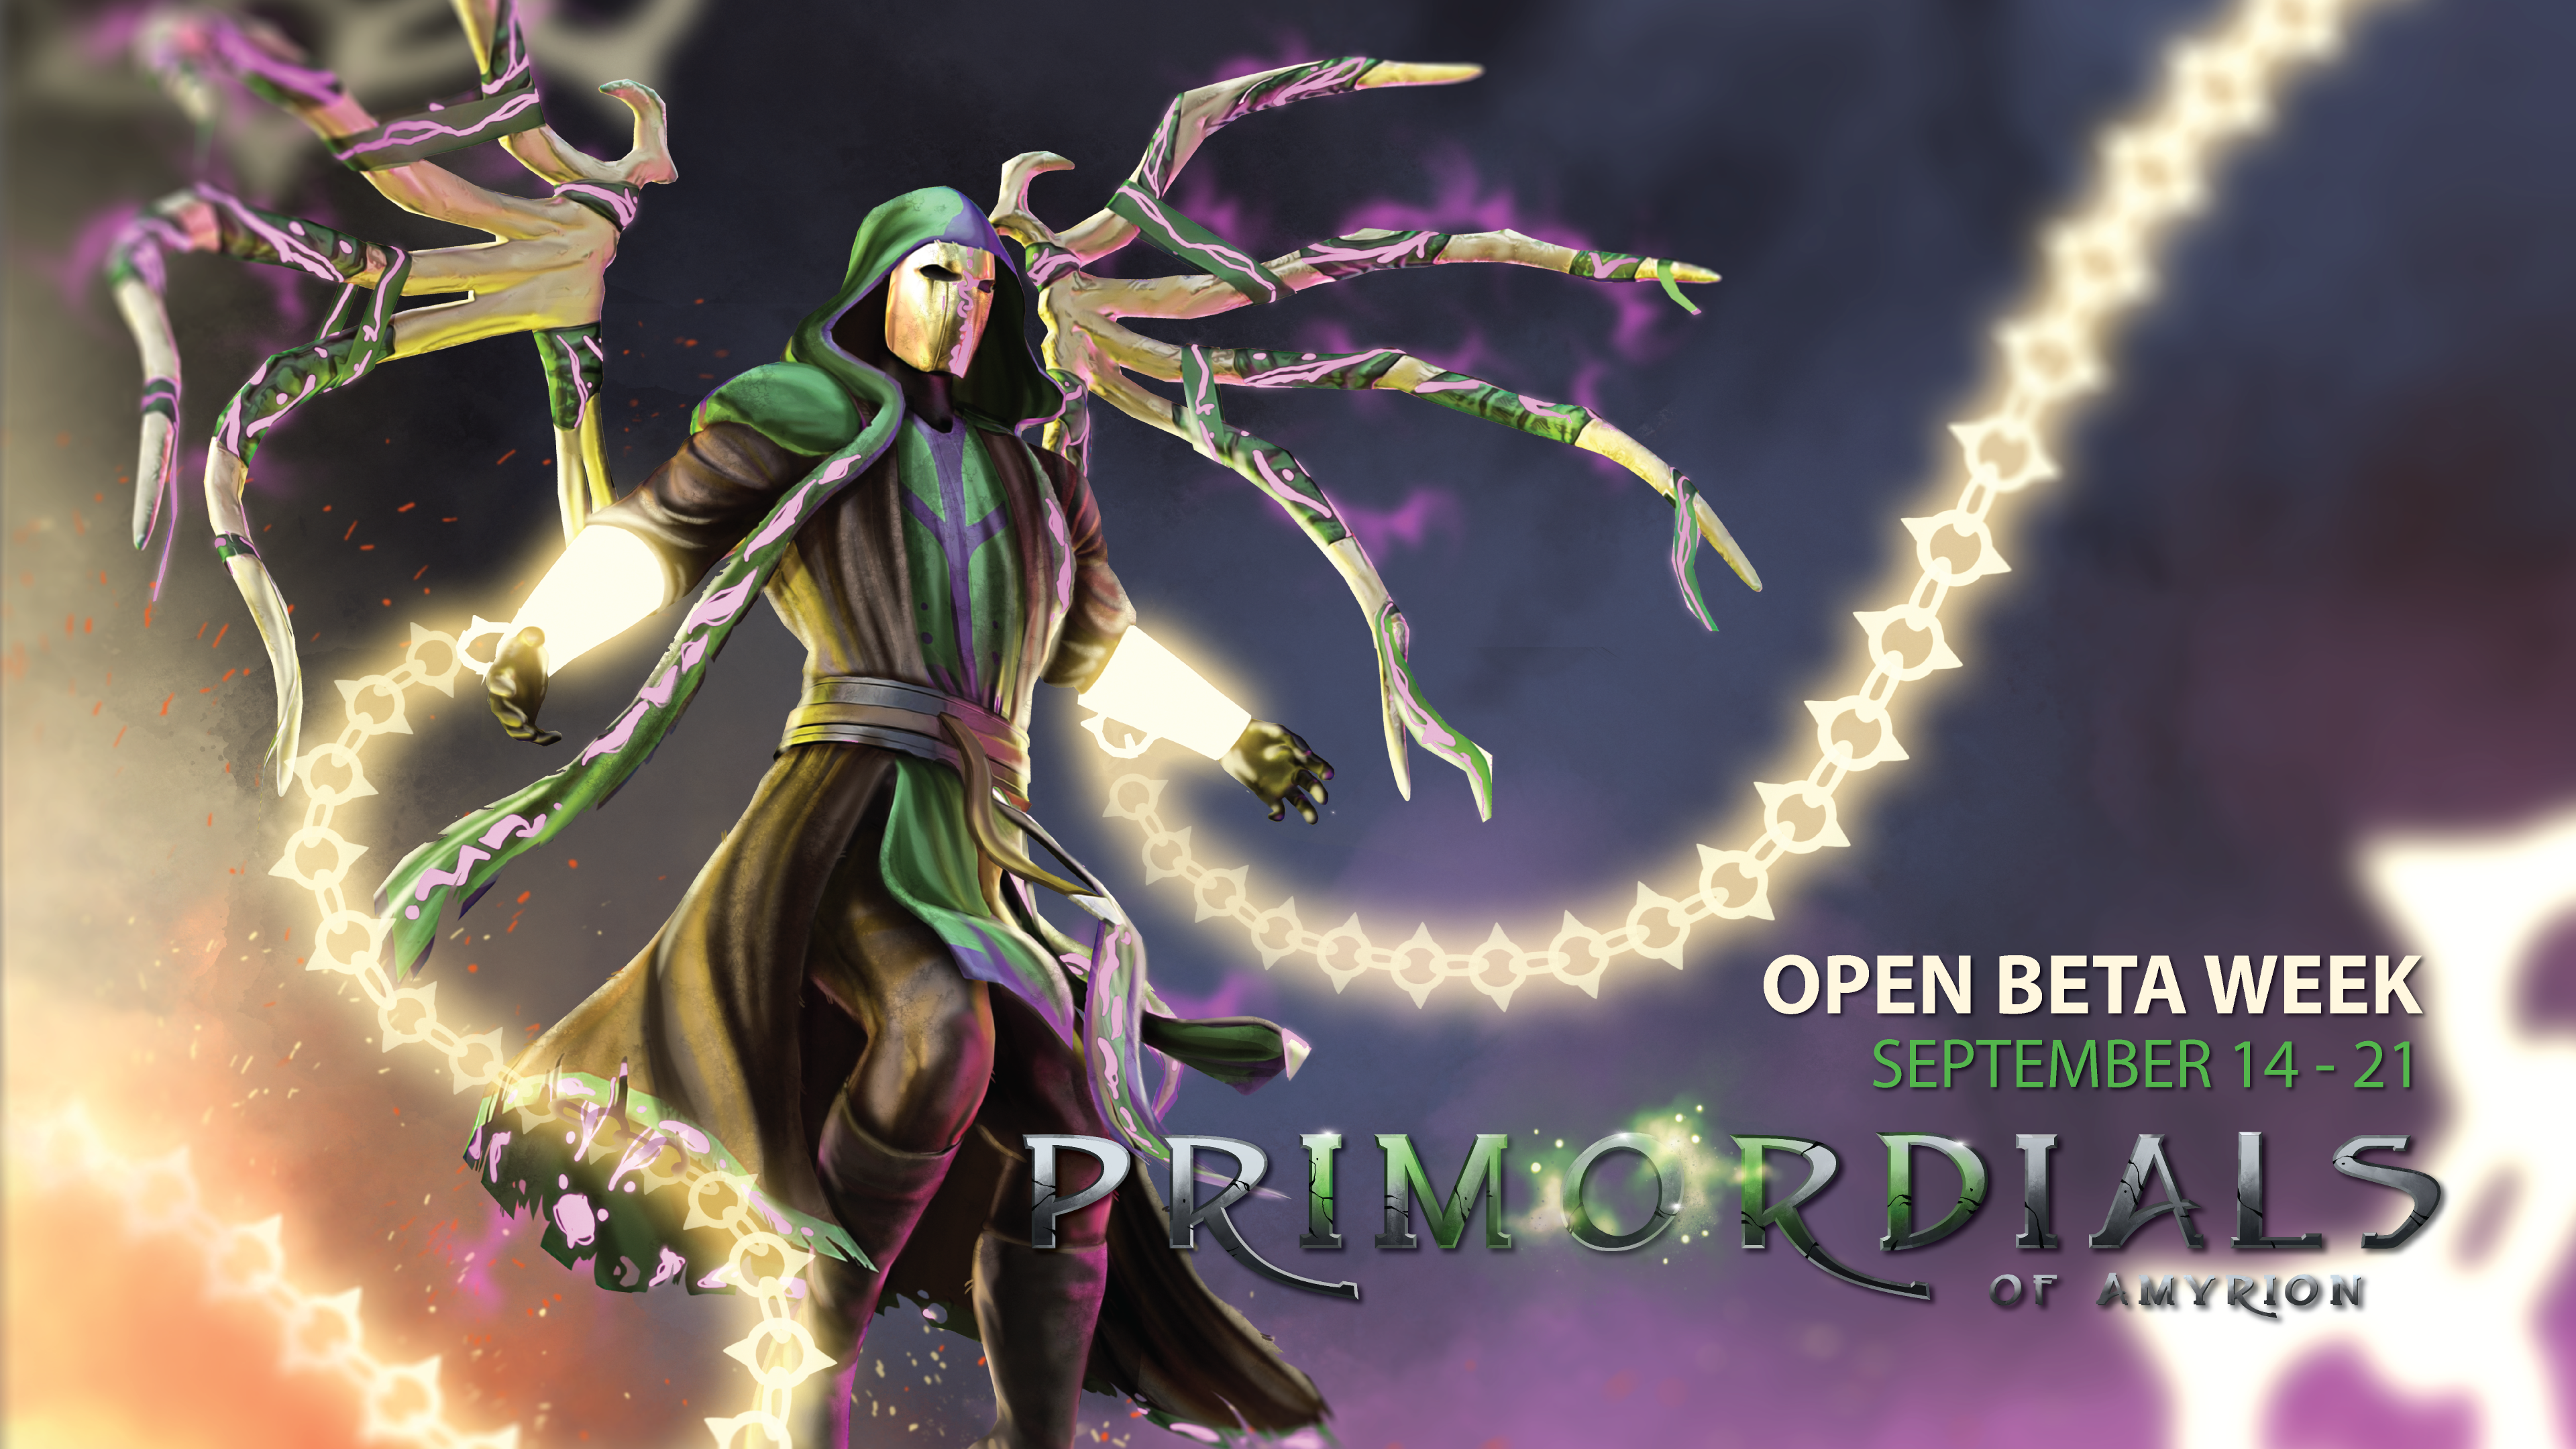 Primordials of Amyrion-open-beta